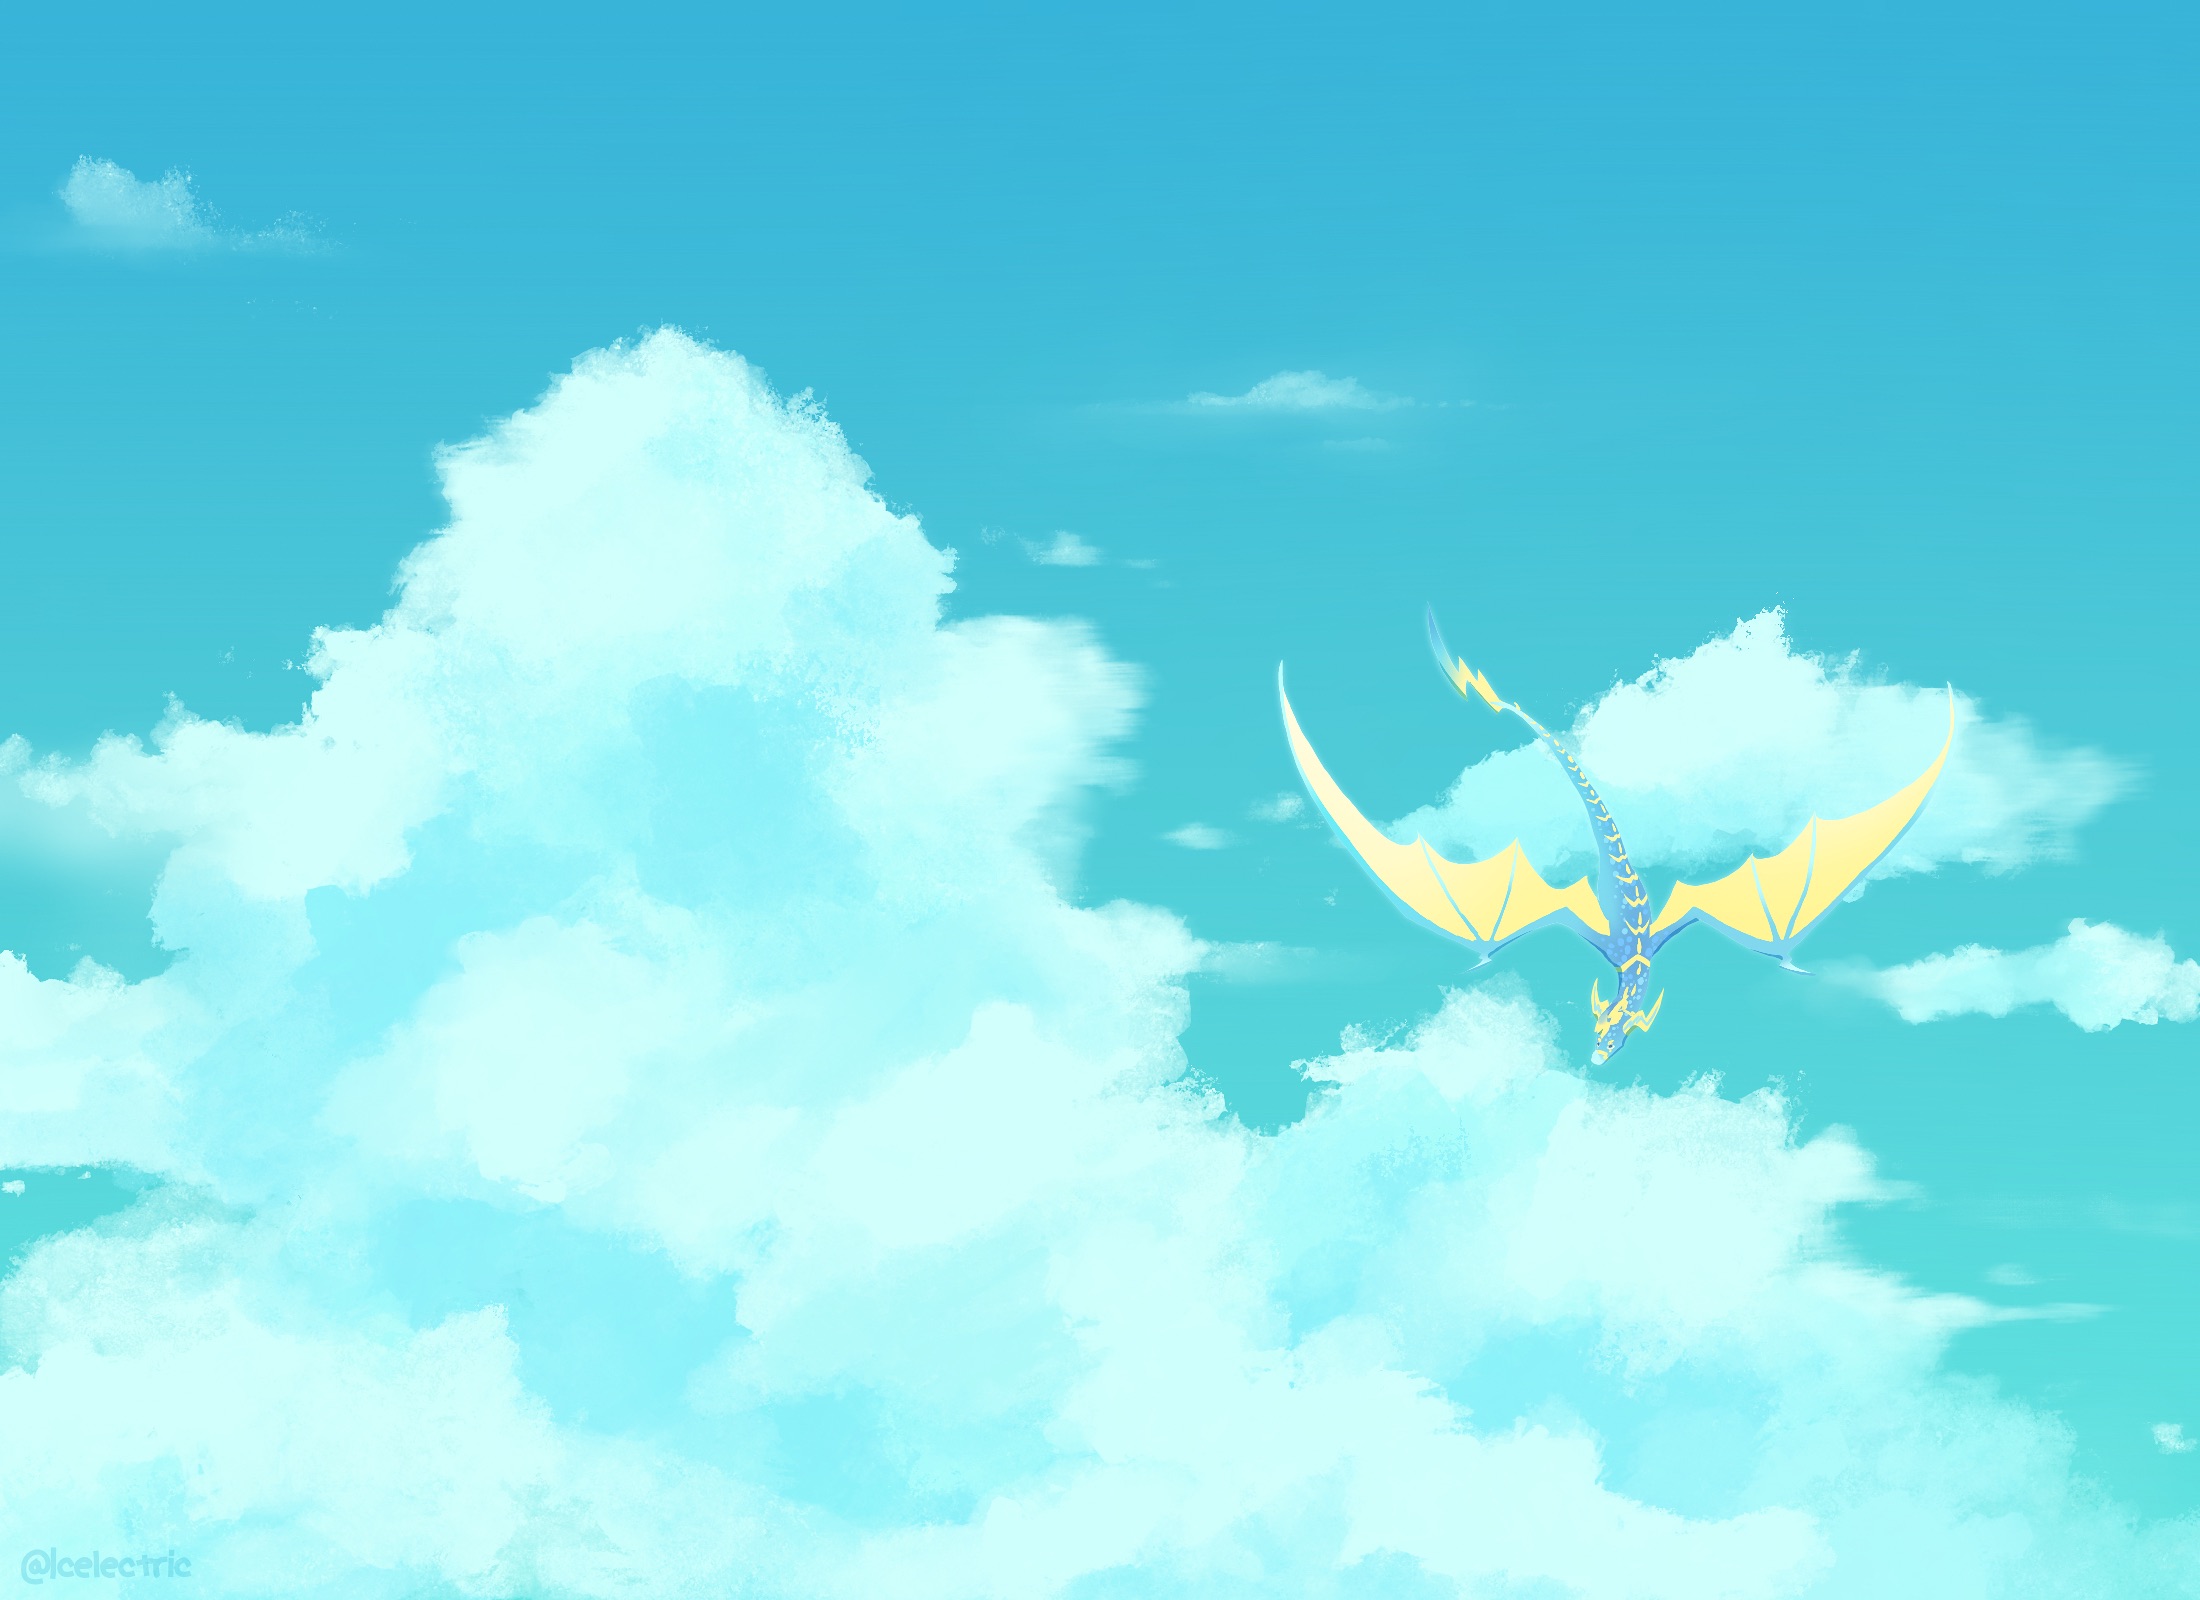 A portrait of the Pokémon Lugia flying with a blue sky background